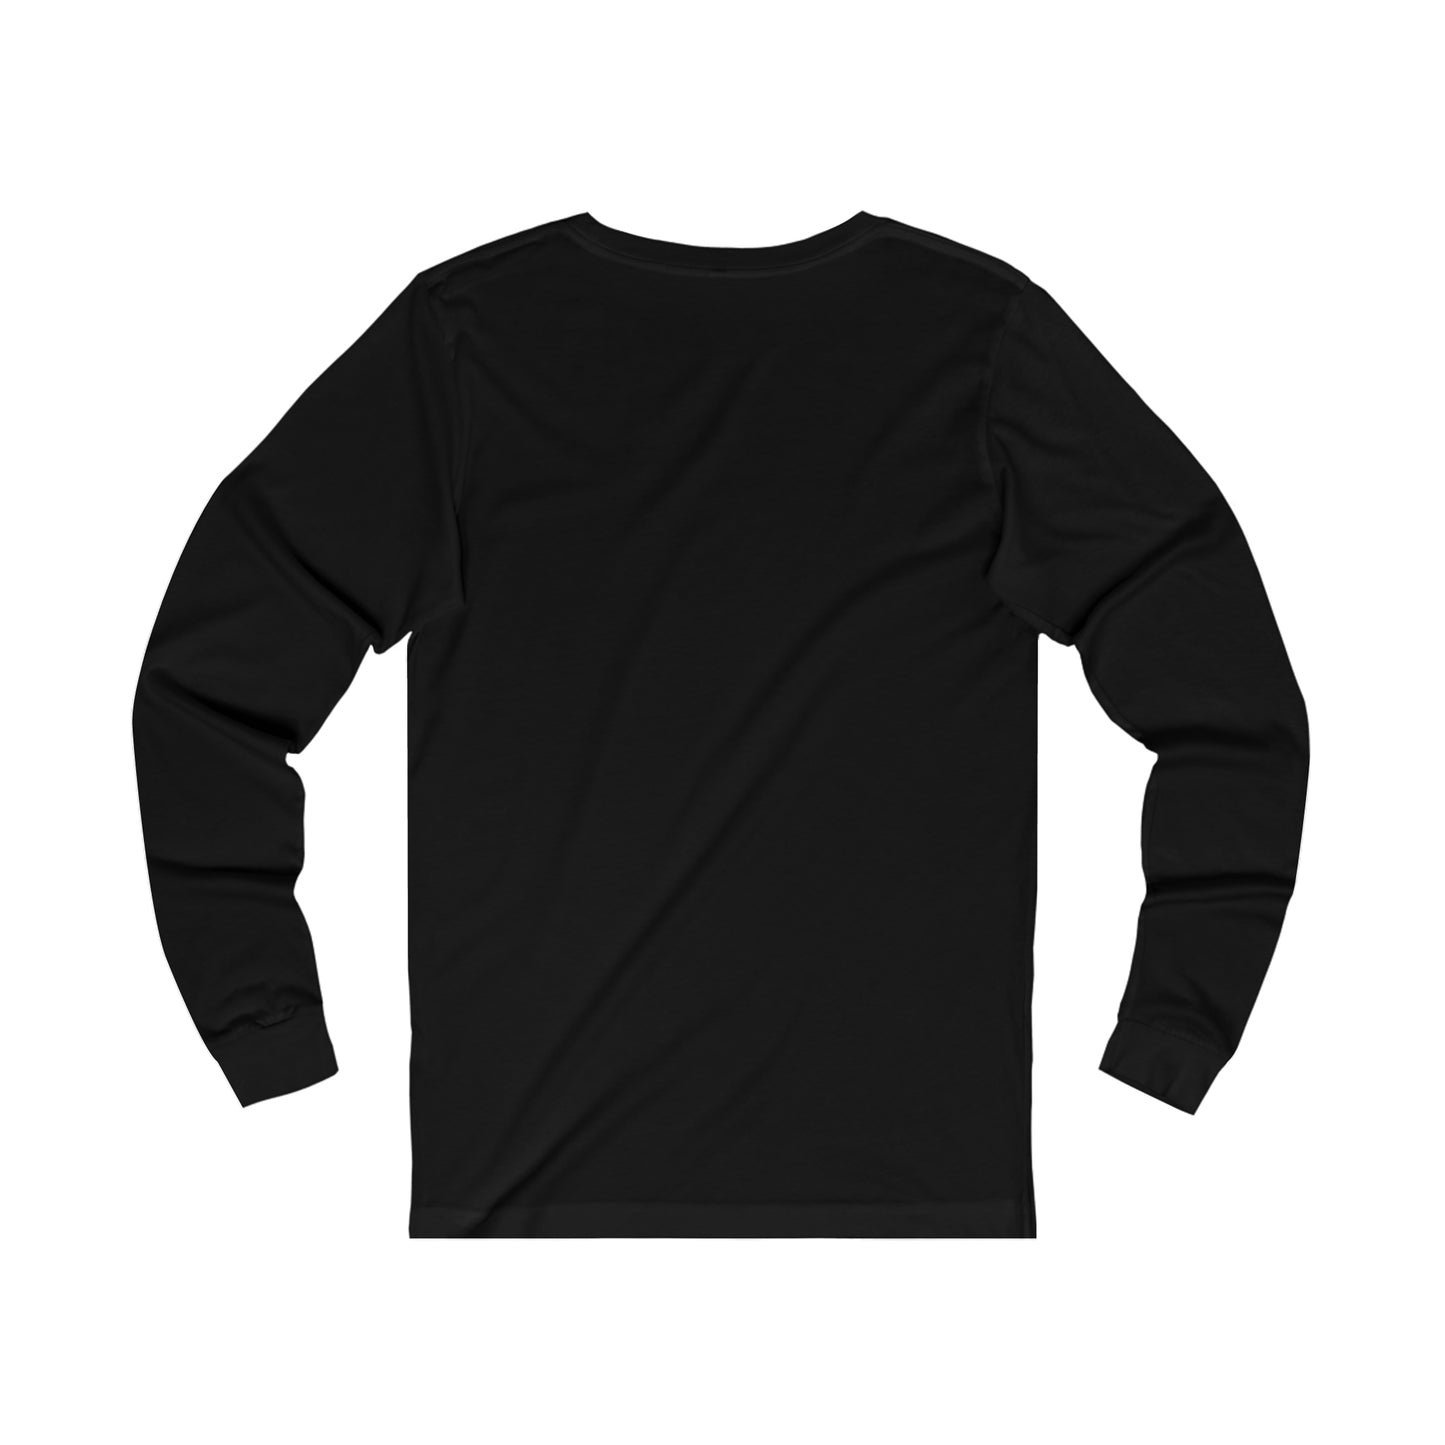 Colourful Apple - Unisex Long Sleeve T-Shirt